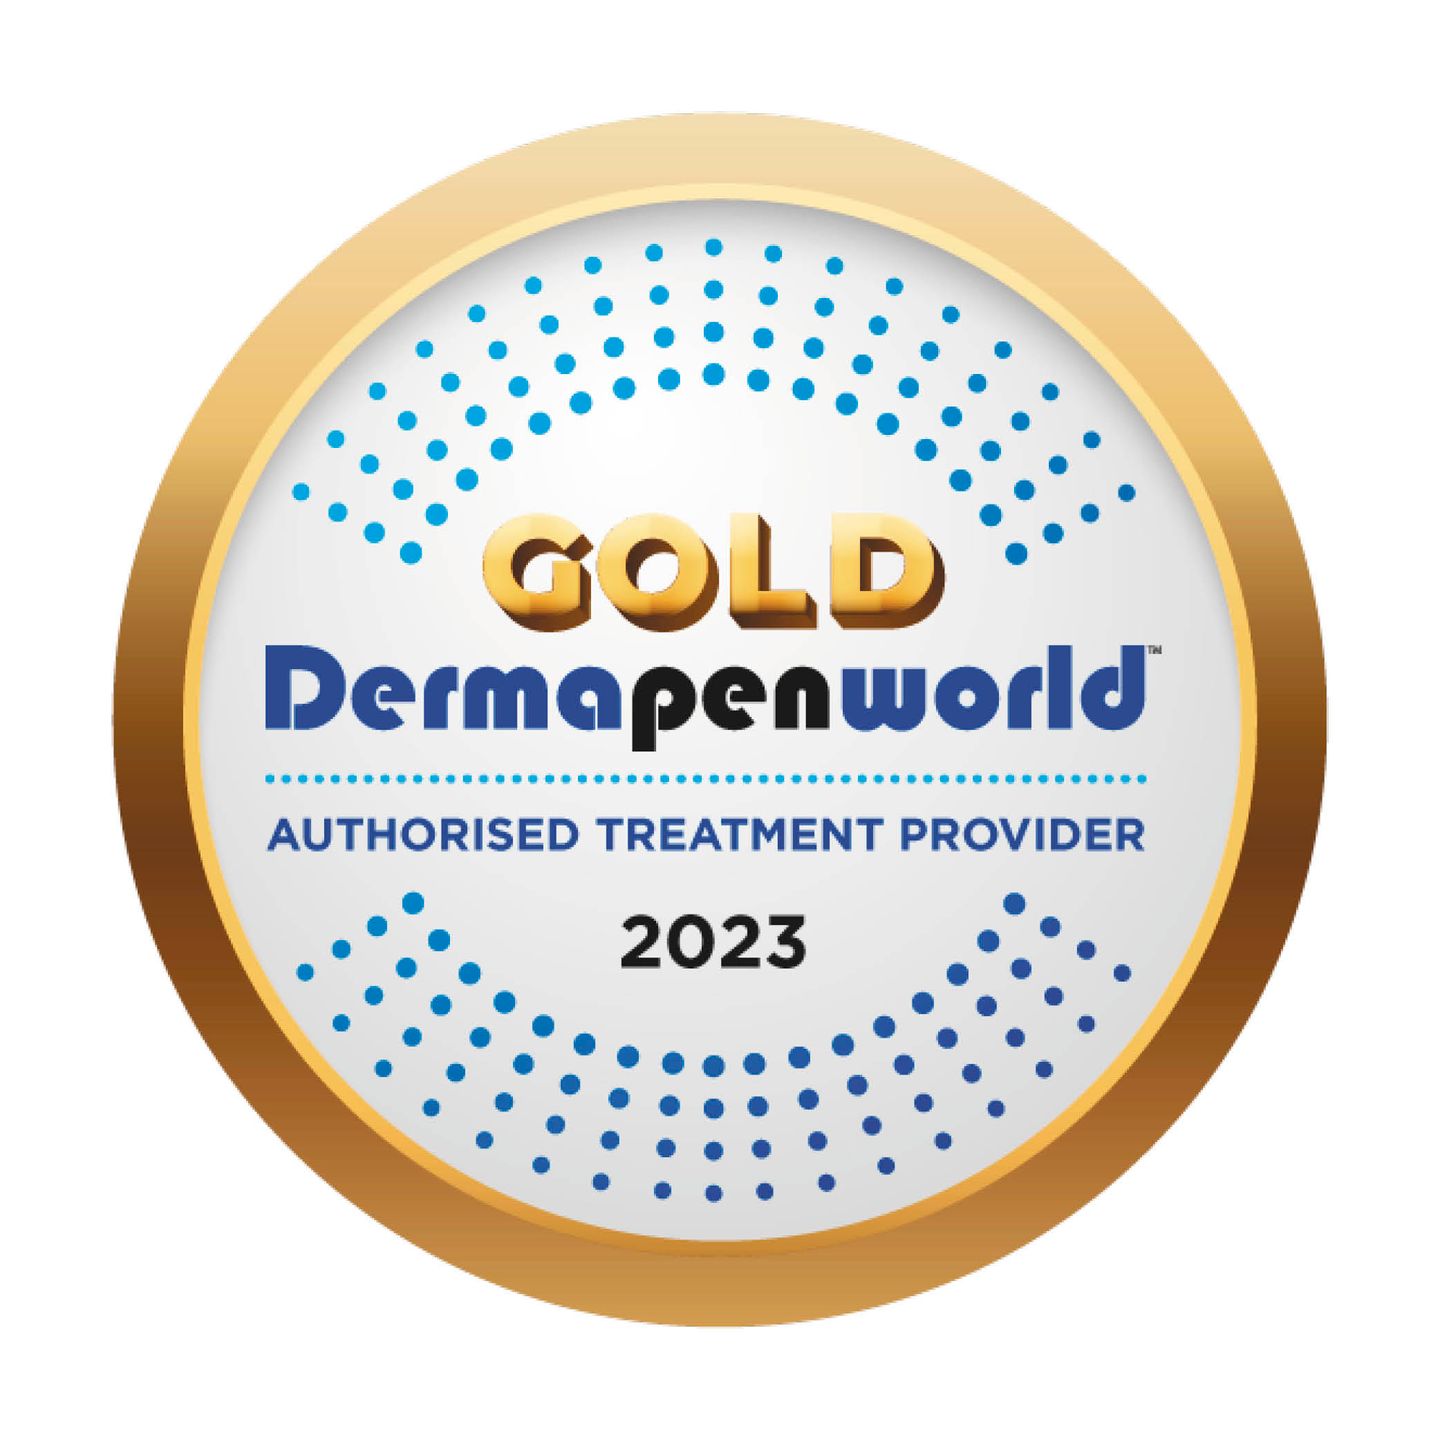 gold dermapenworld authorised treatment provider